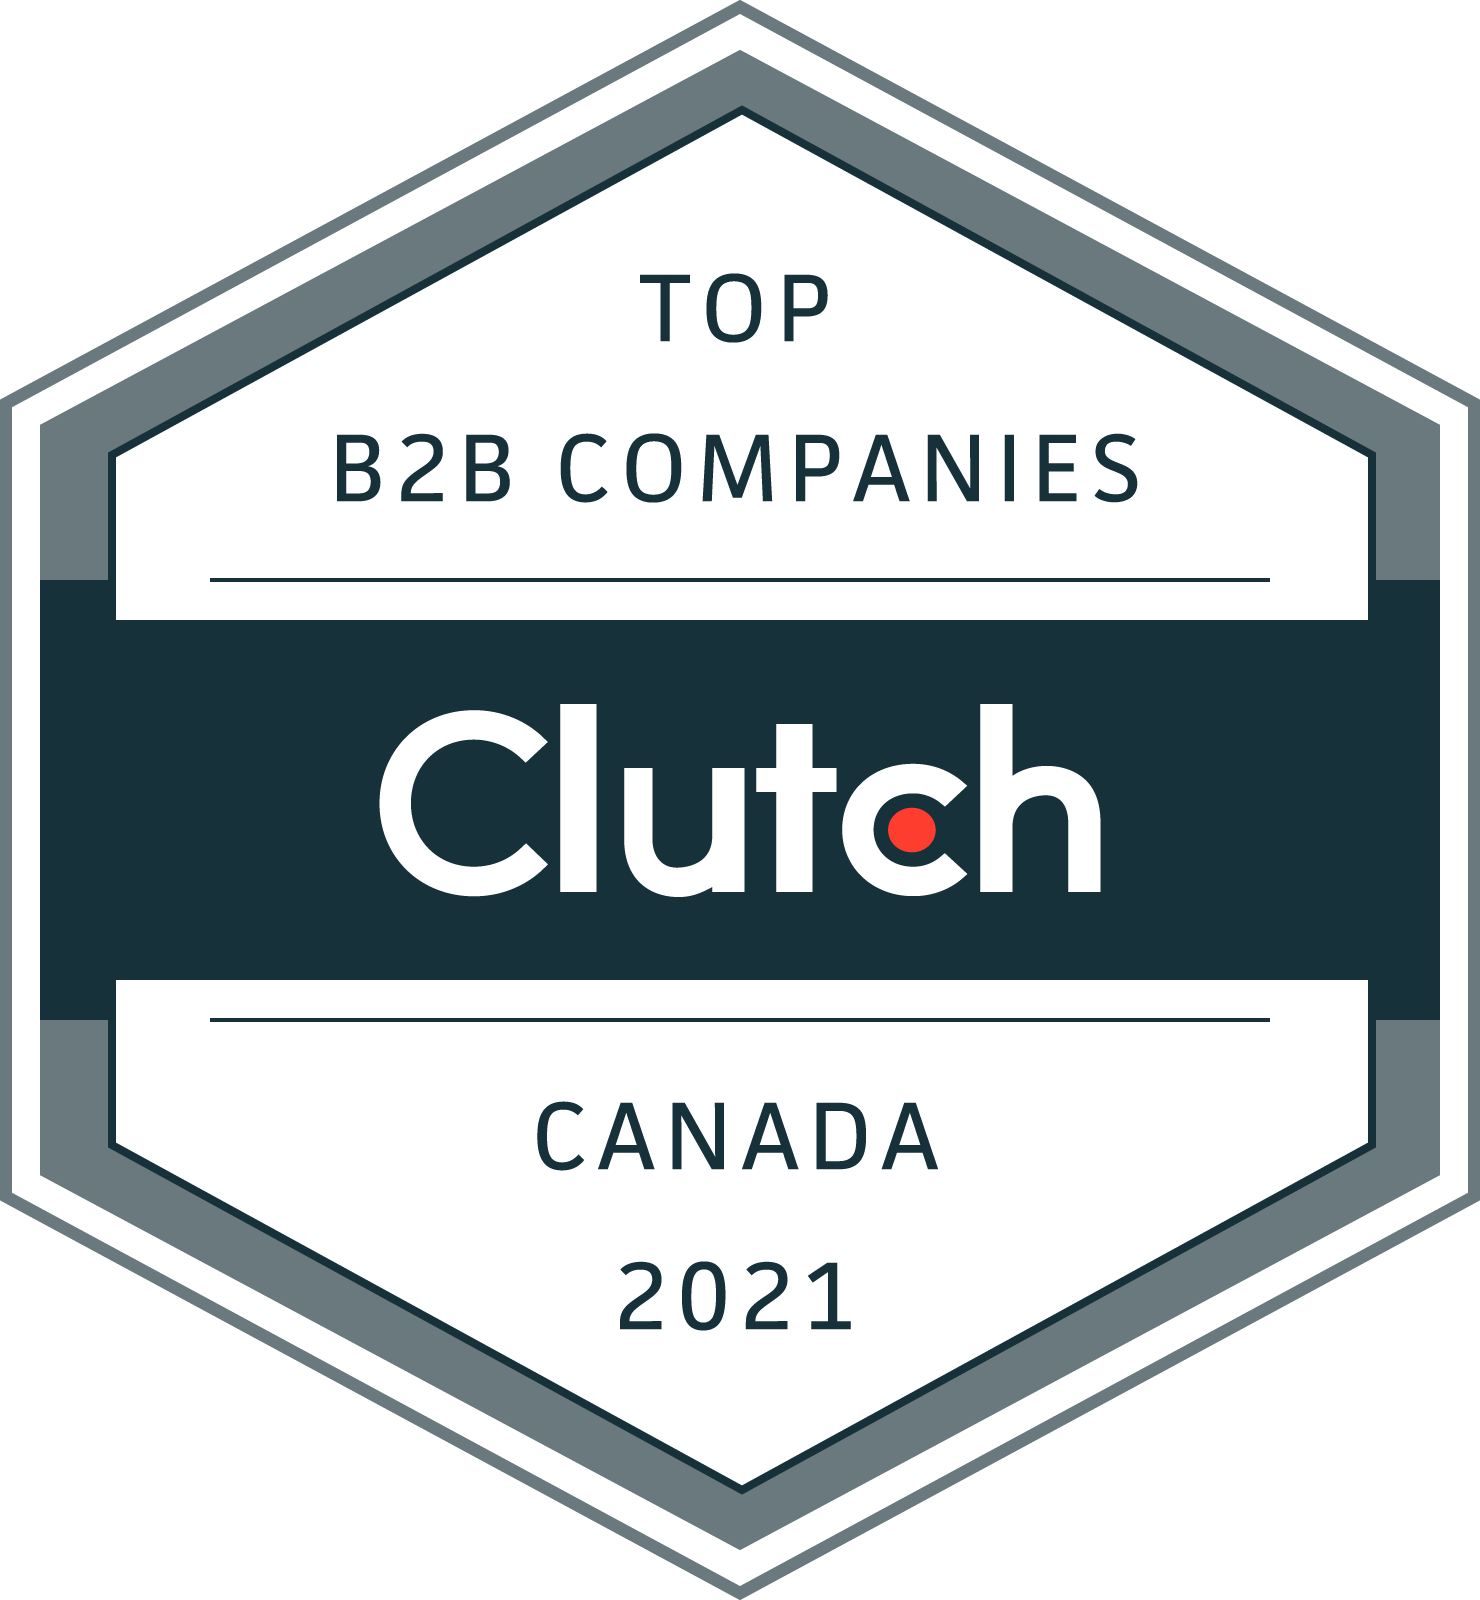 Clutch Top B2B Companies Canada 2021